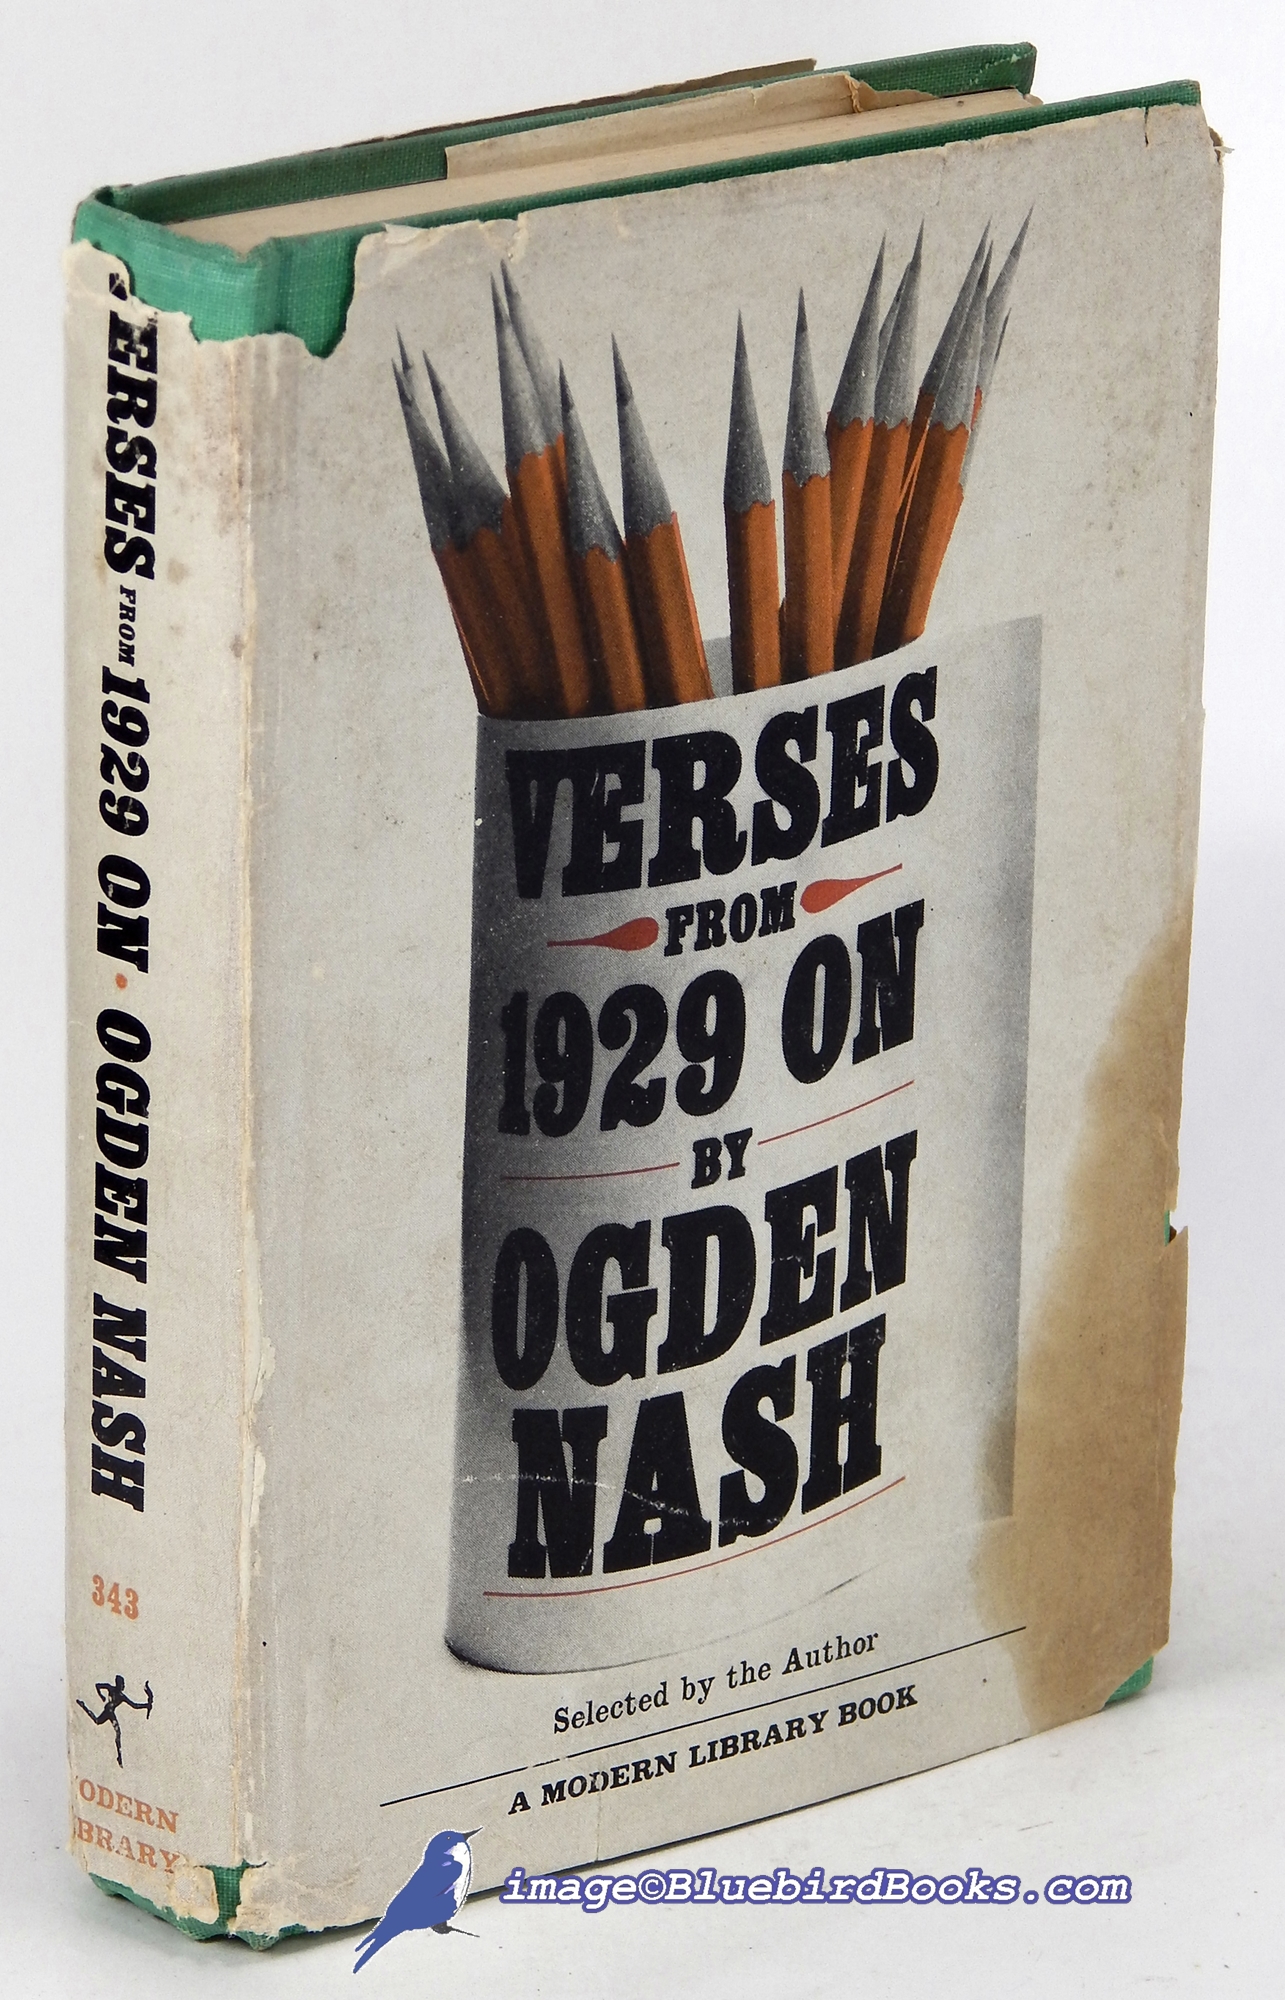 NASH, OGDEN - Verses from 1929 on (Modern Library #343. 1)